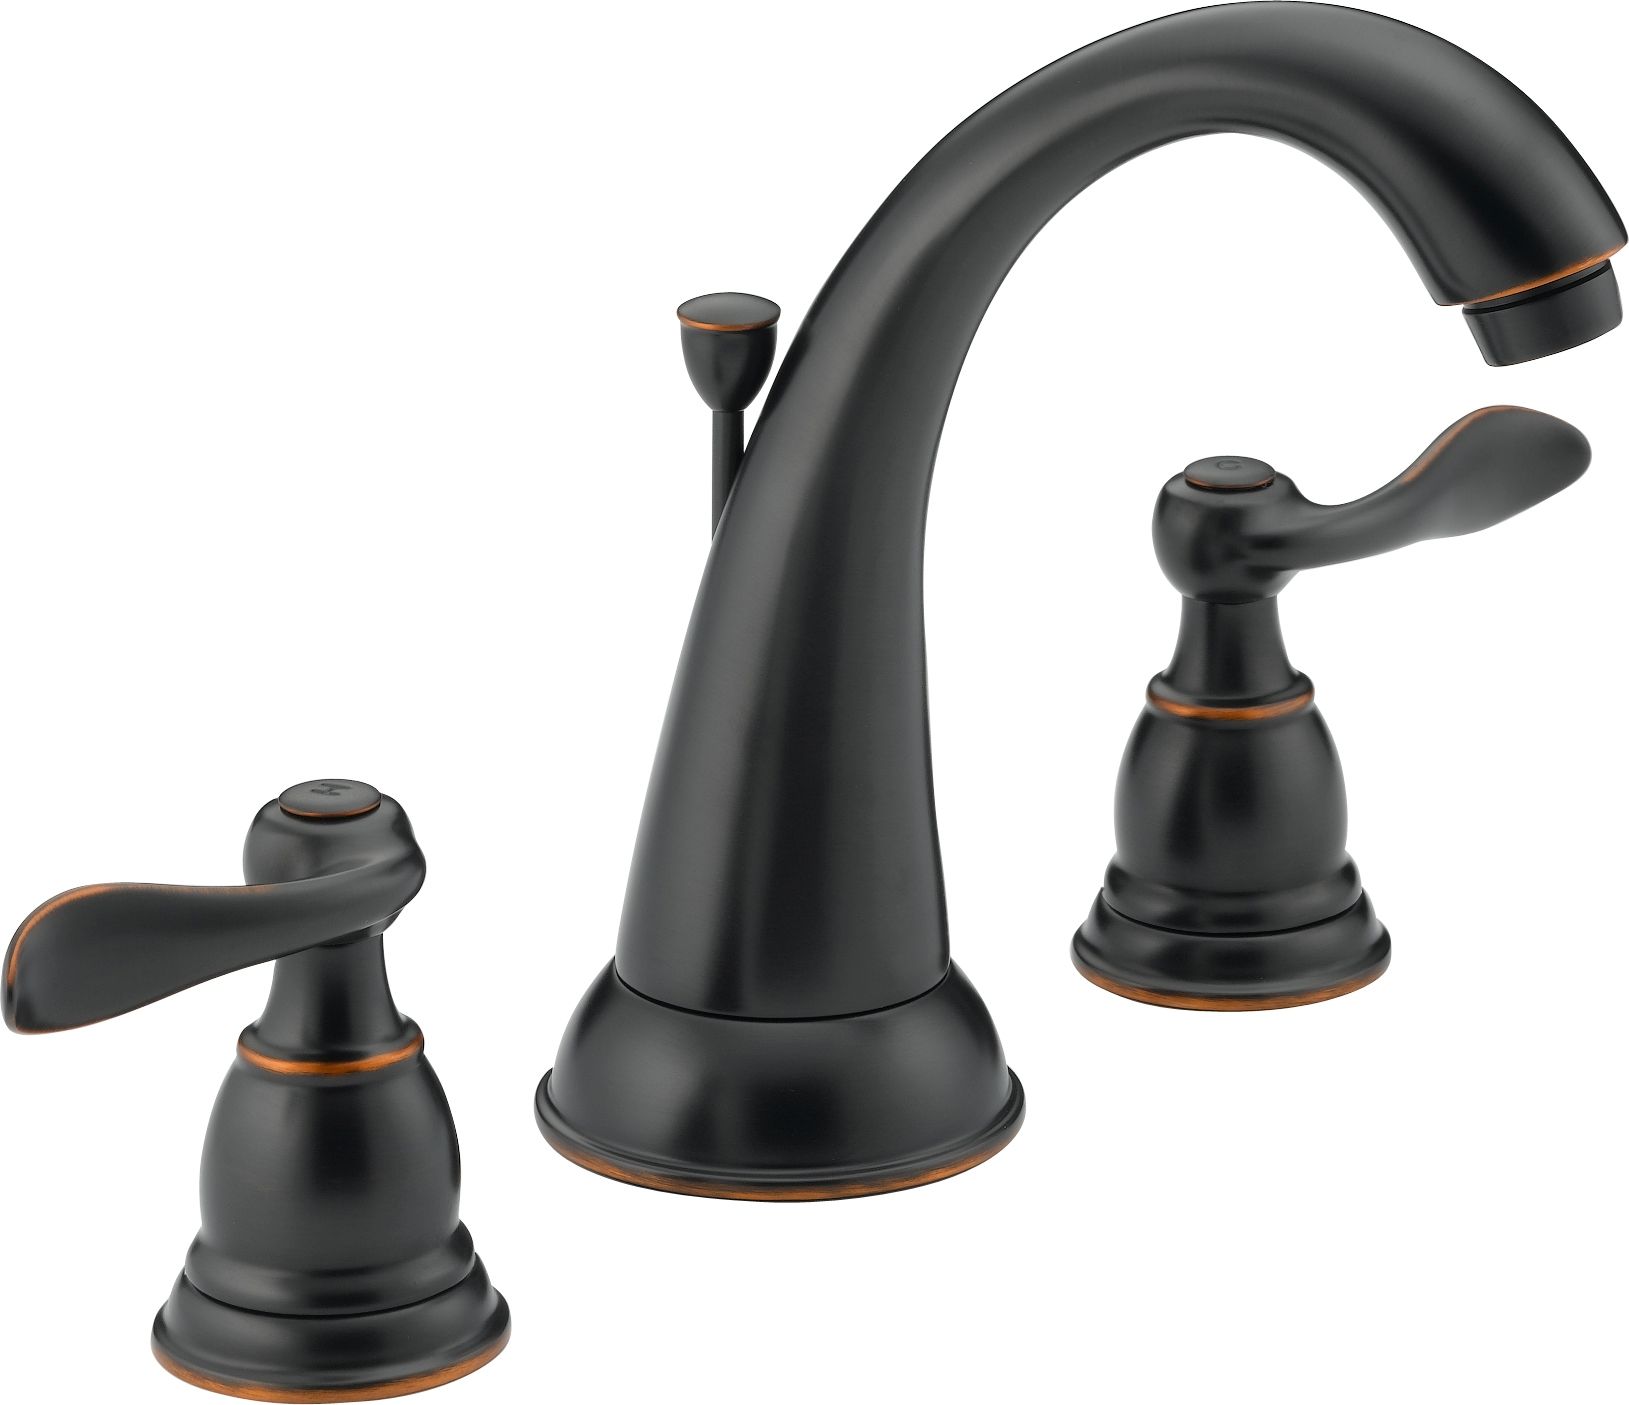 Delta B3596lf Ob Oil Rubbed Bronze, Oil Rubbed Bronze Bathroom Faucet Clearance